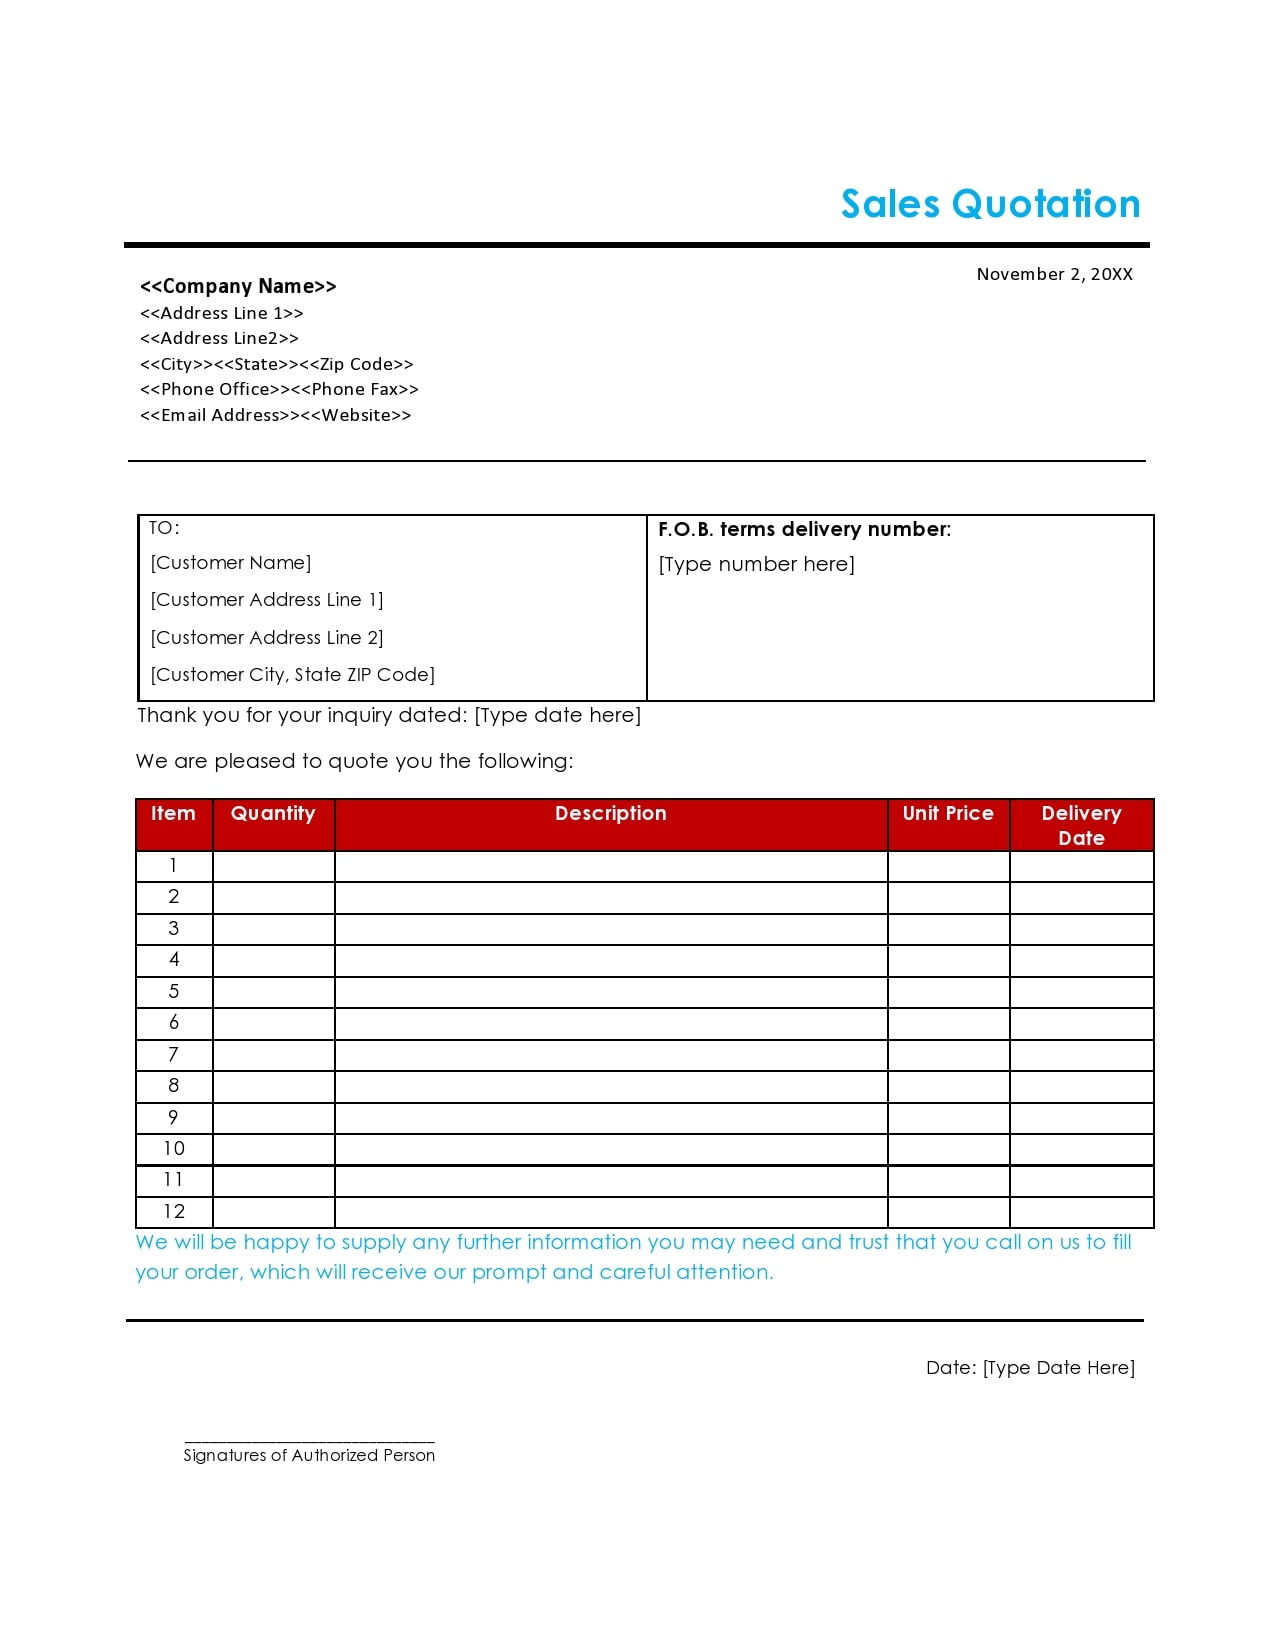 price-quotation-form-excel-workbook-xls-flevypro-document-flevy